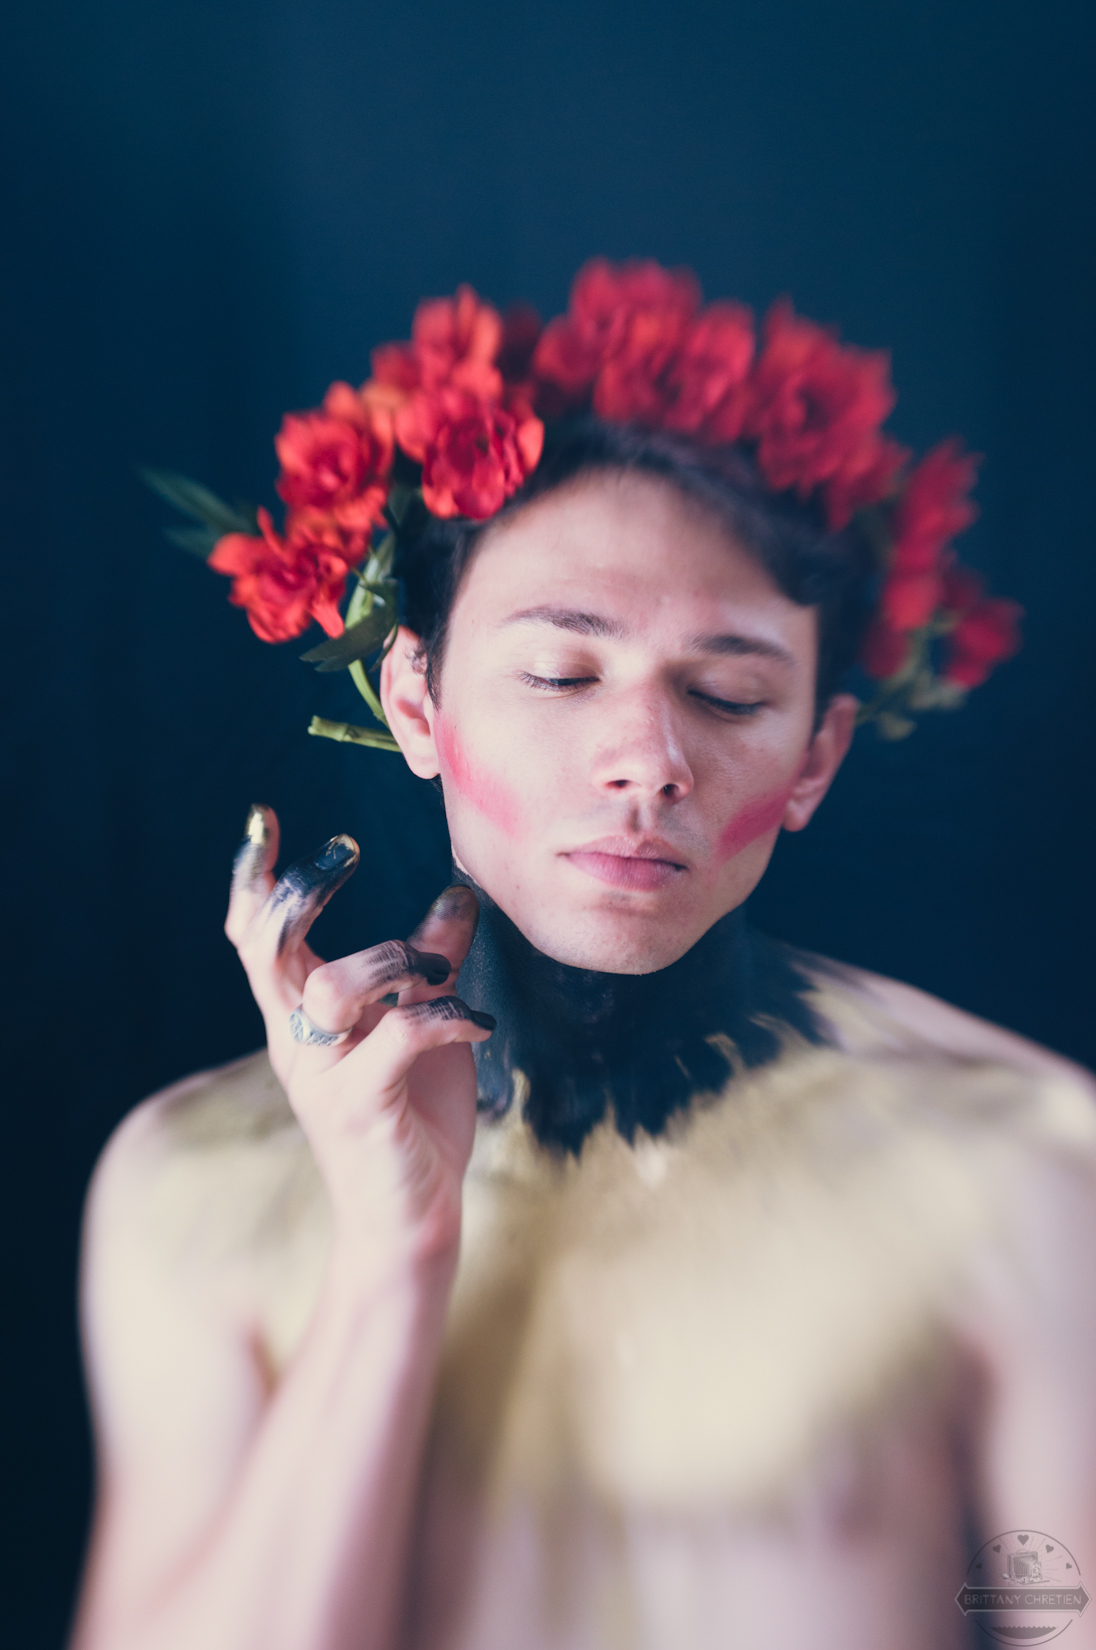 Portraiture male model occult floral lensbaby Nikon